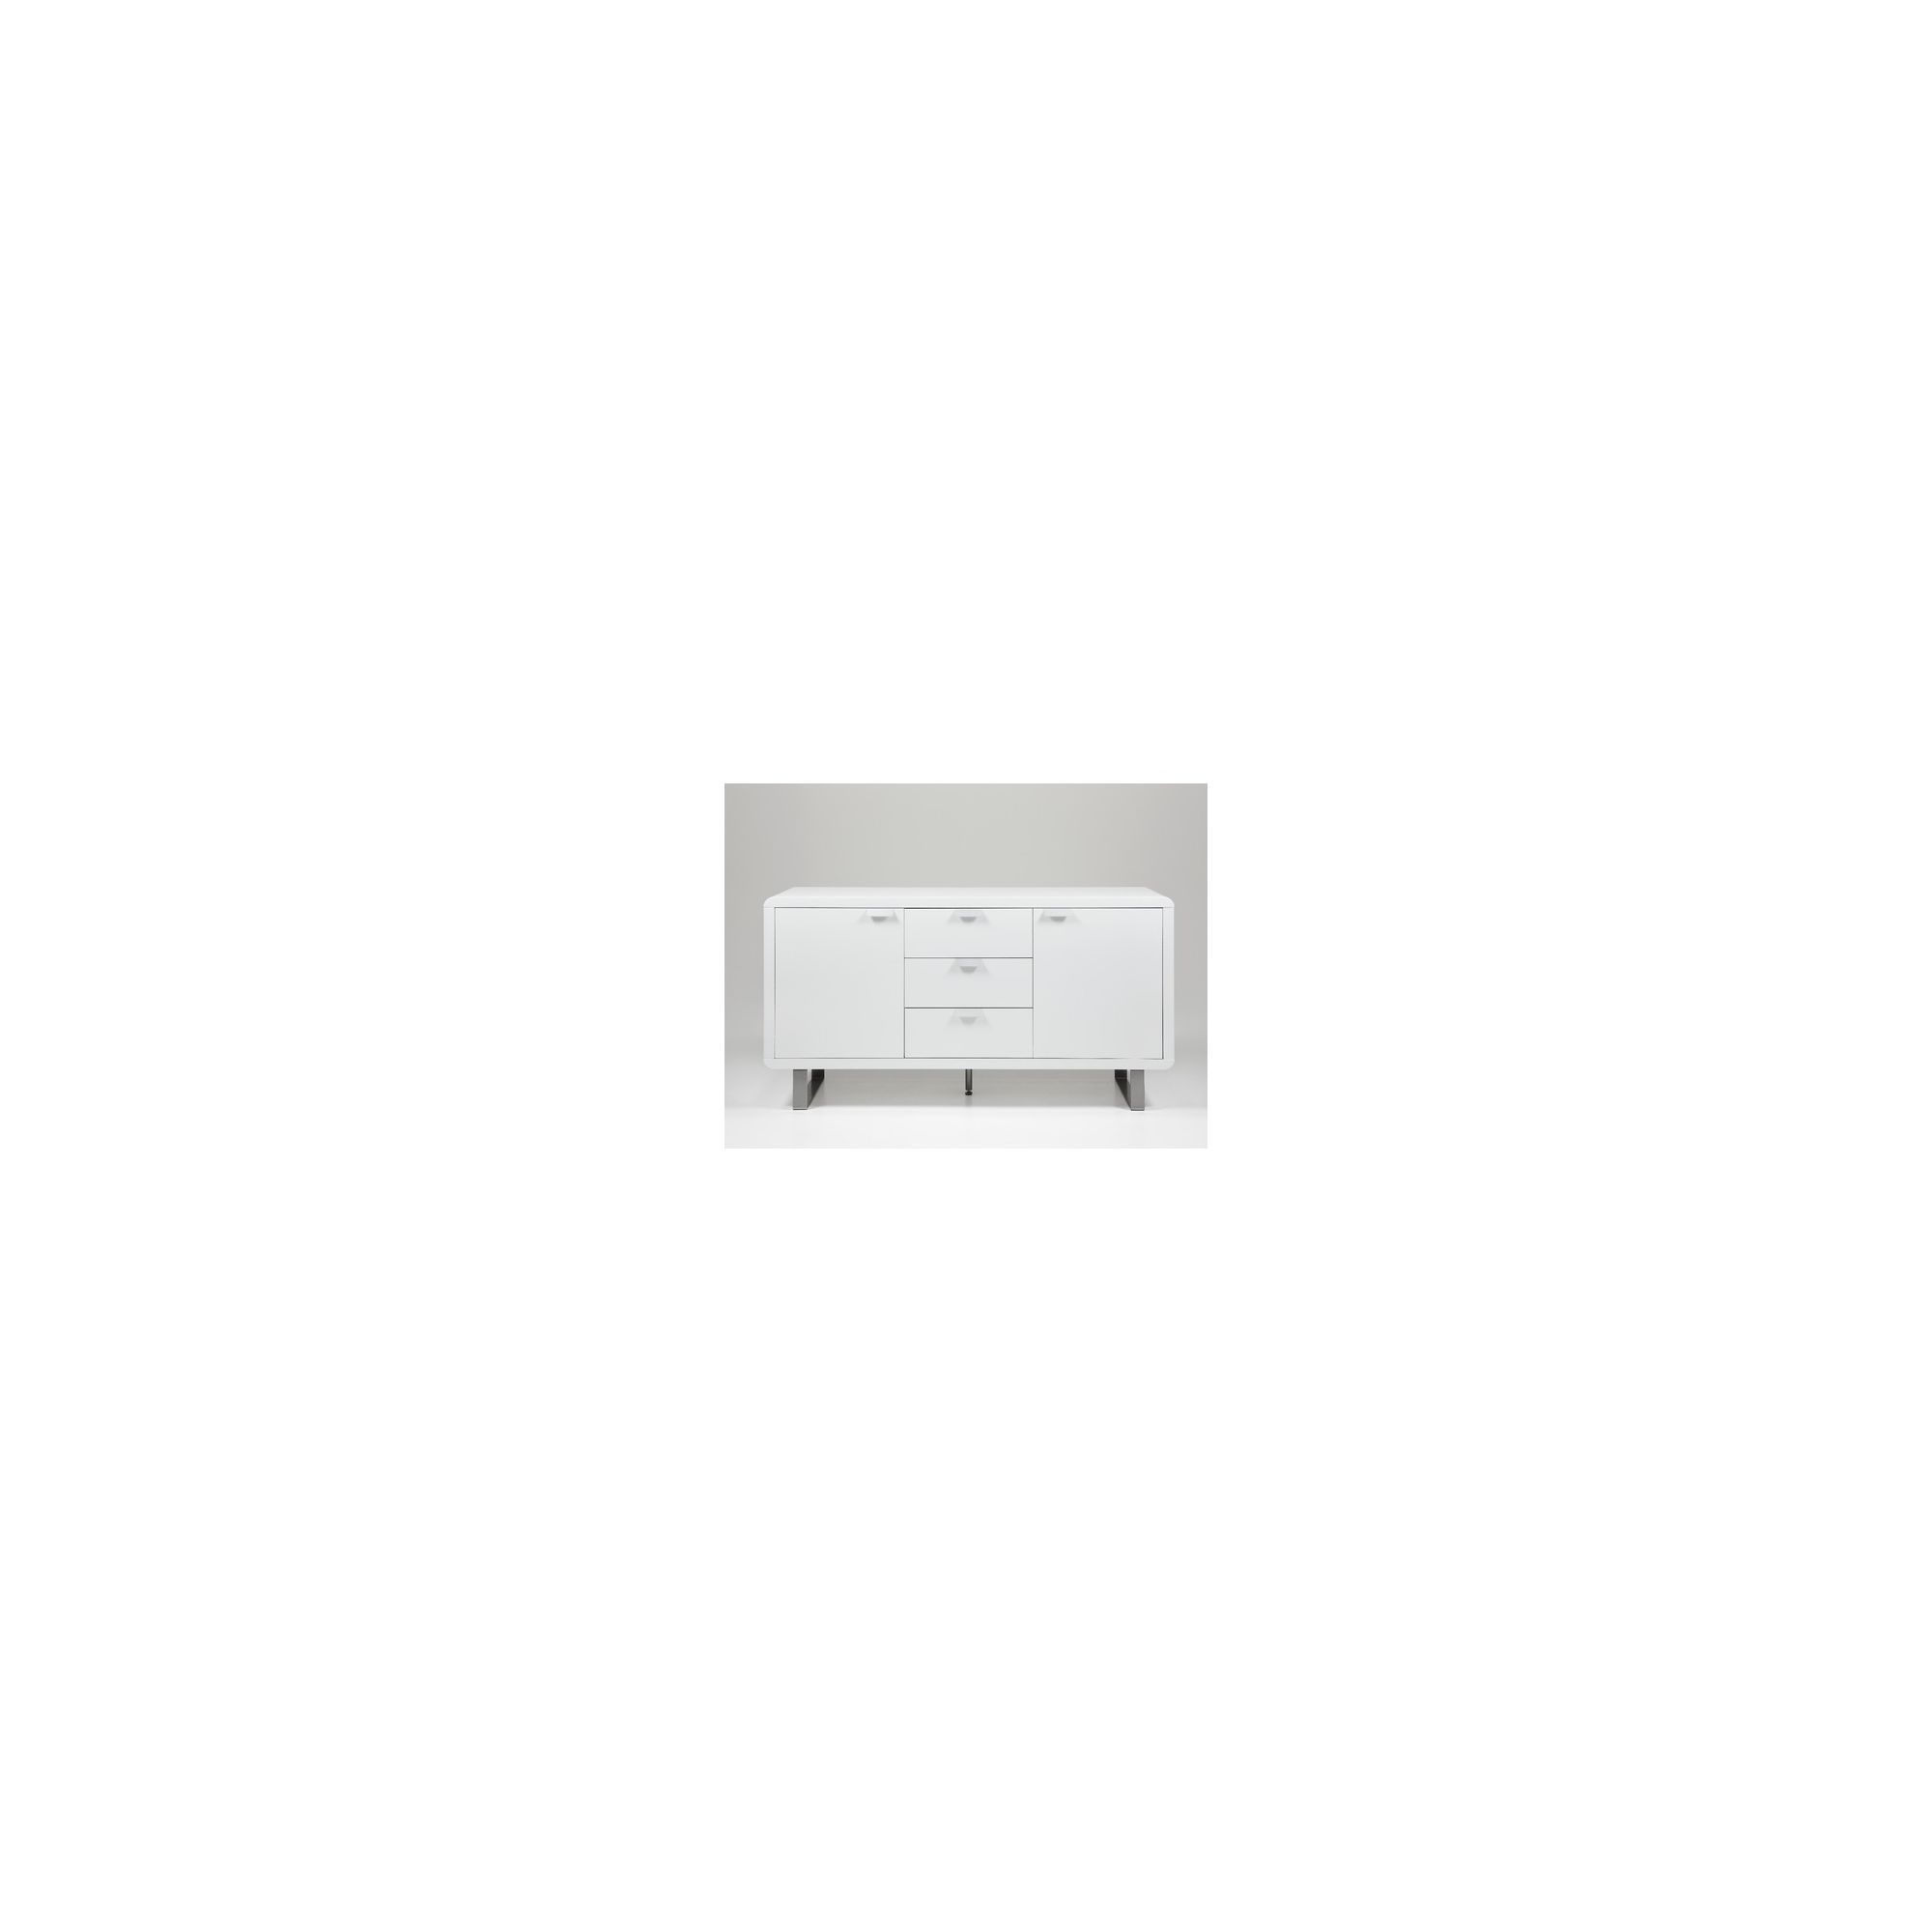 Aspect Design Sleek Sideboard in White at Tescos Direct